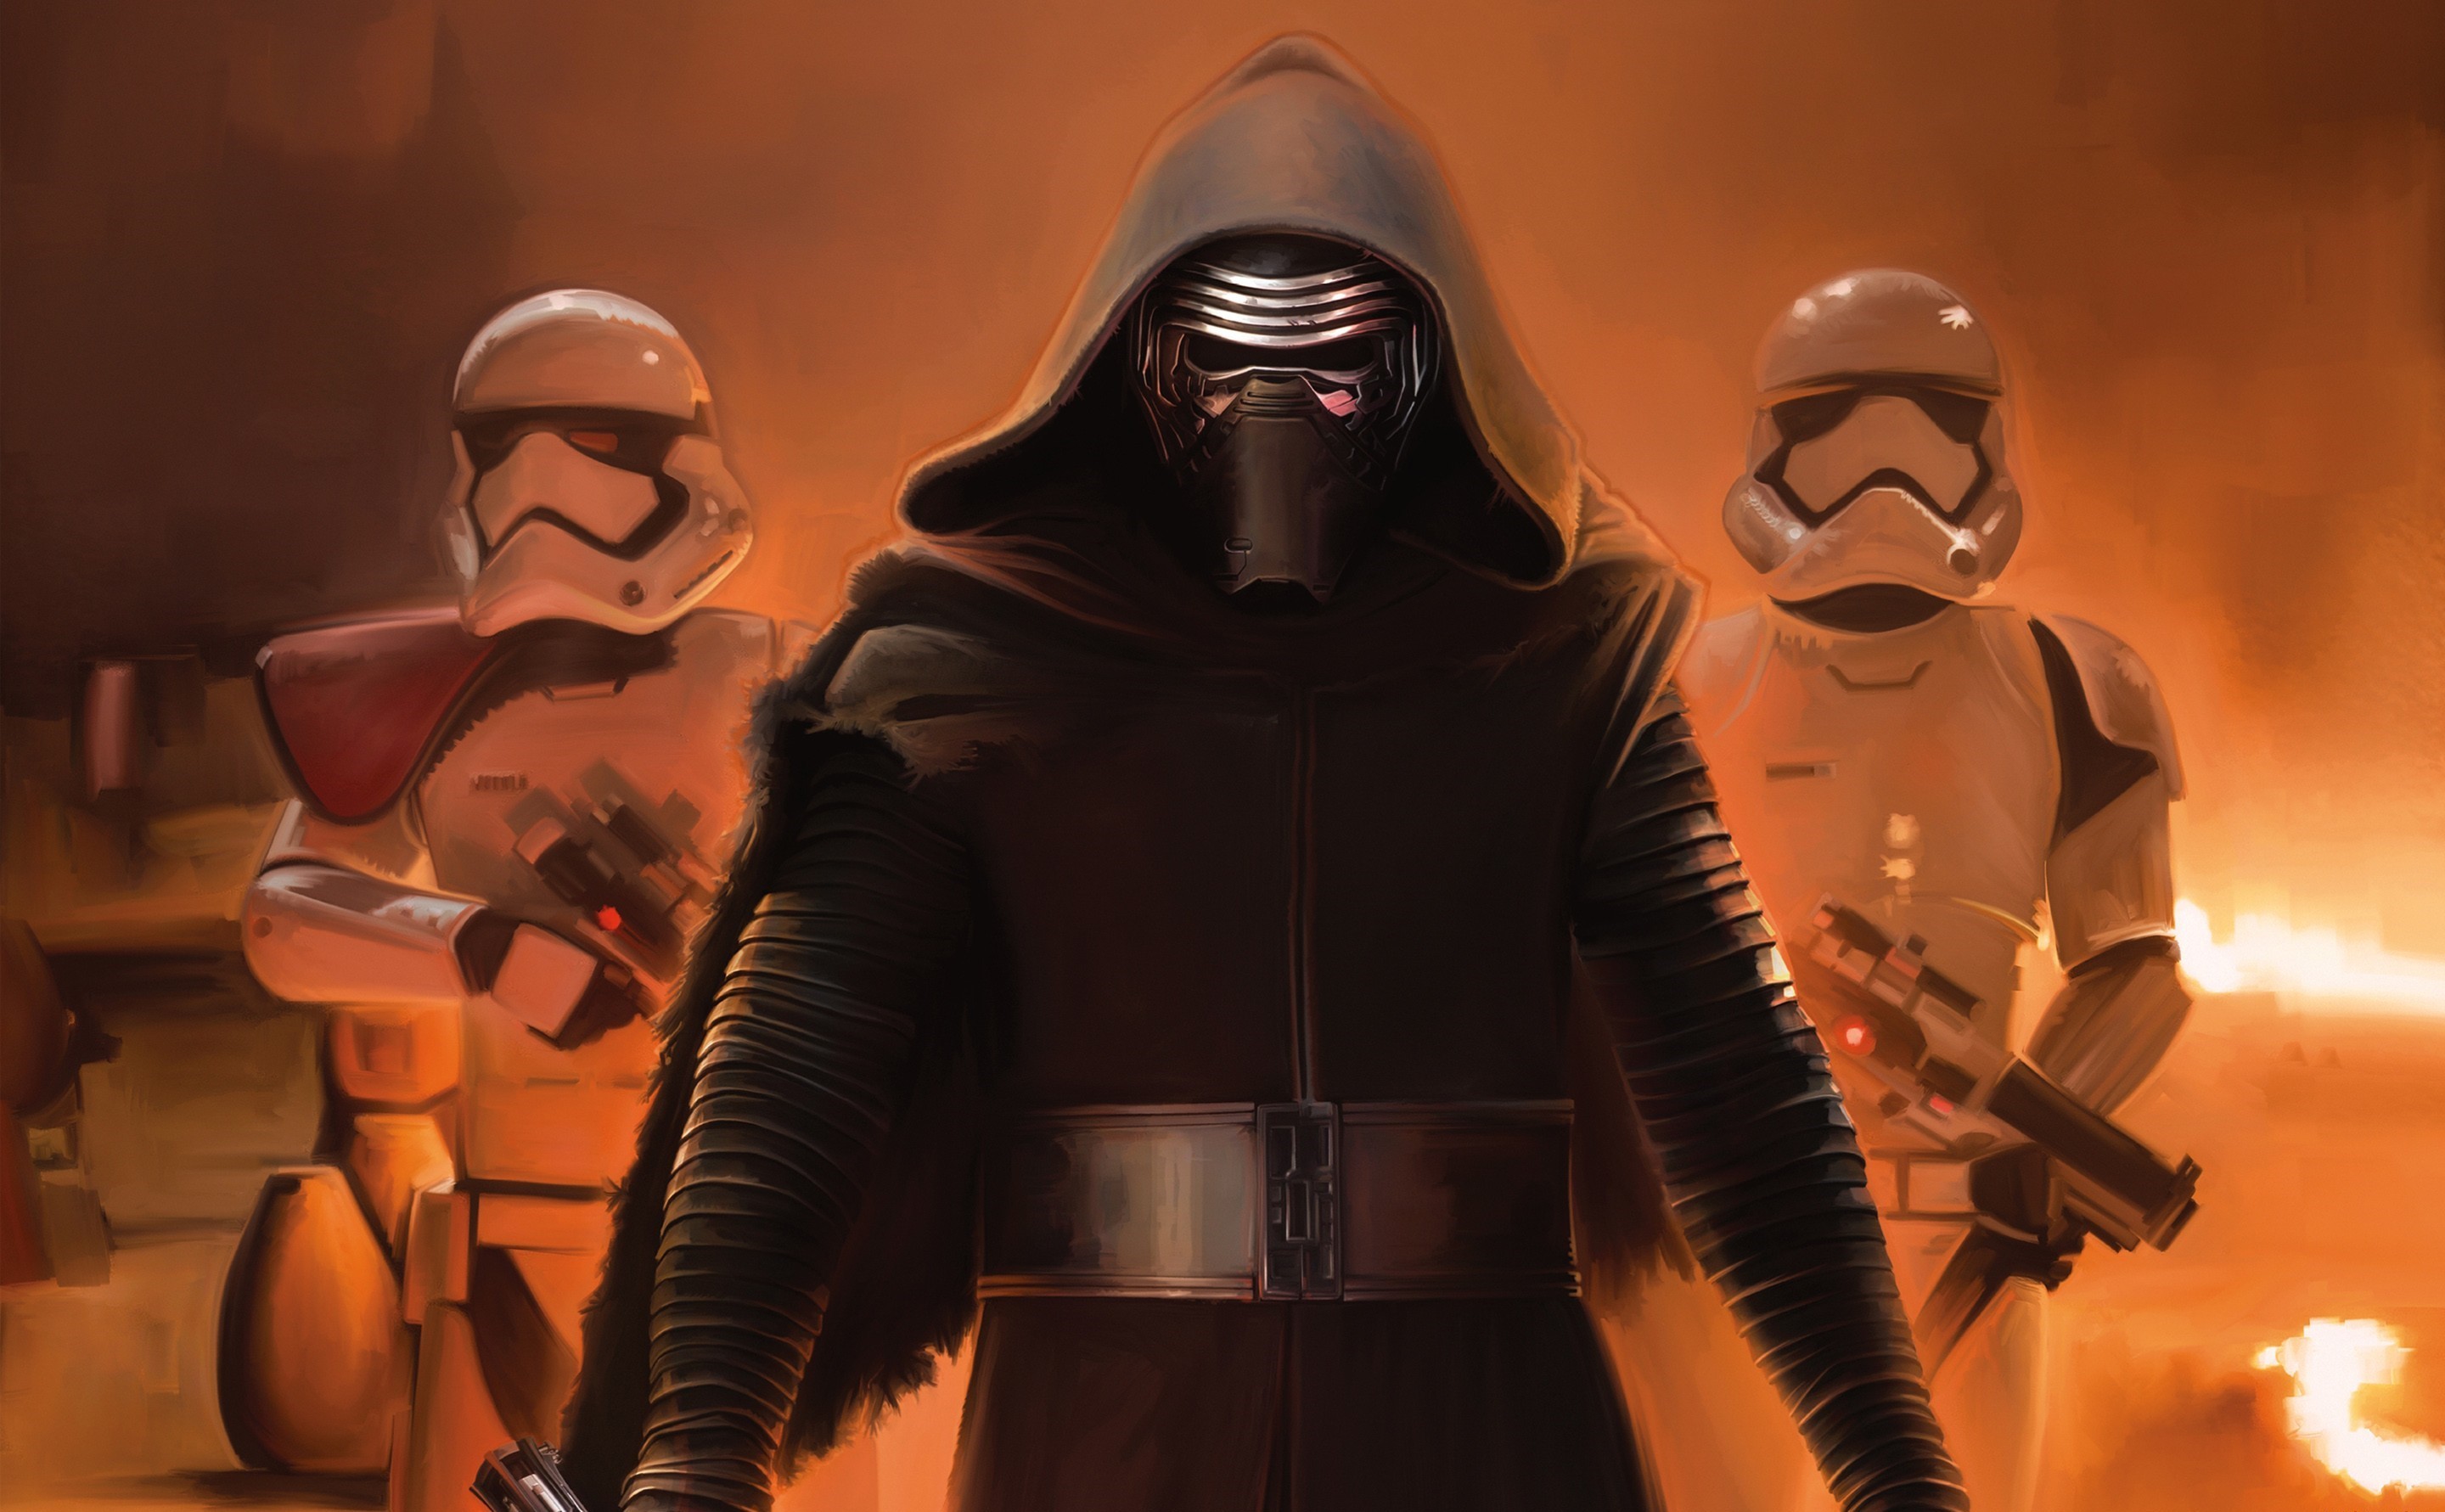 General 2880x1781 Kylo Ren Star Wars: The Force Awakens artwork First Order Trooper movies Star Wars Villains science fiction